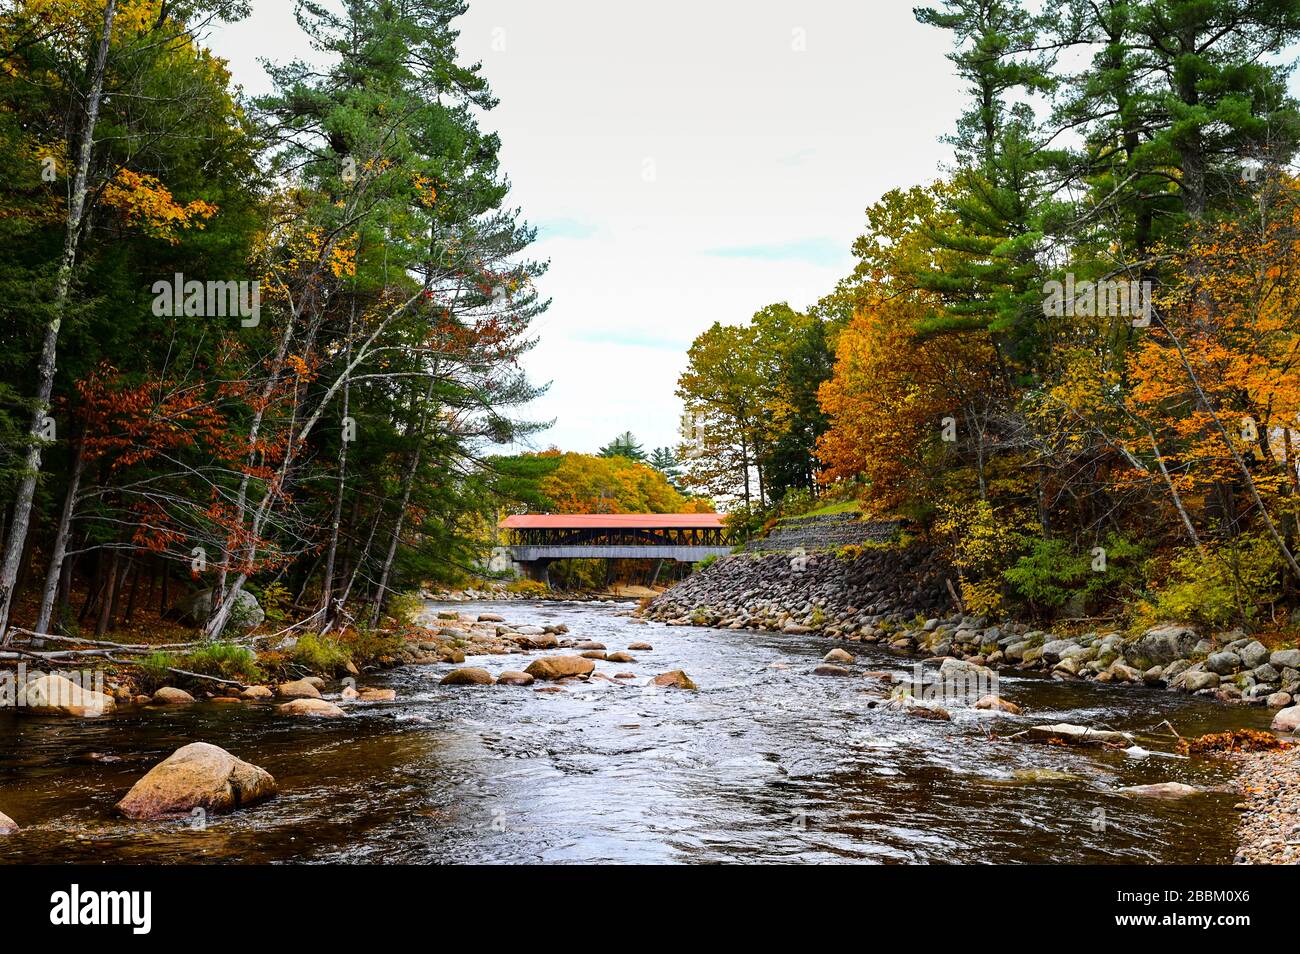 Covered bridges in New England Stock Photo - Alamy